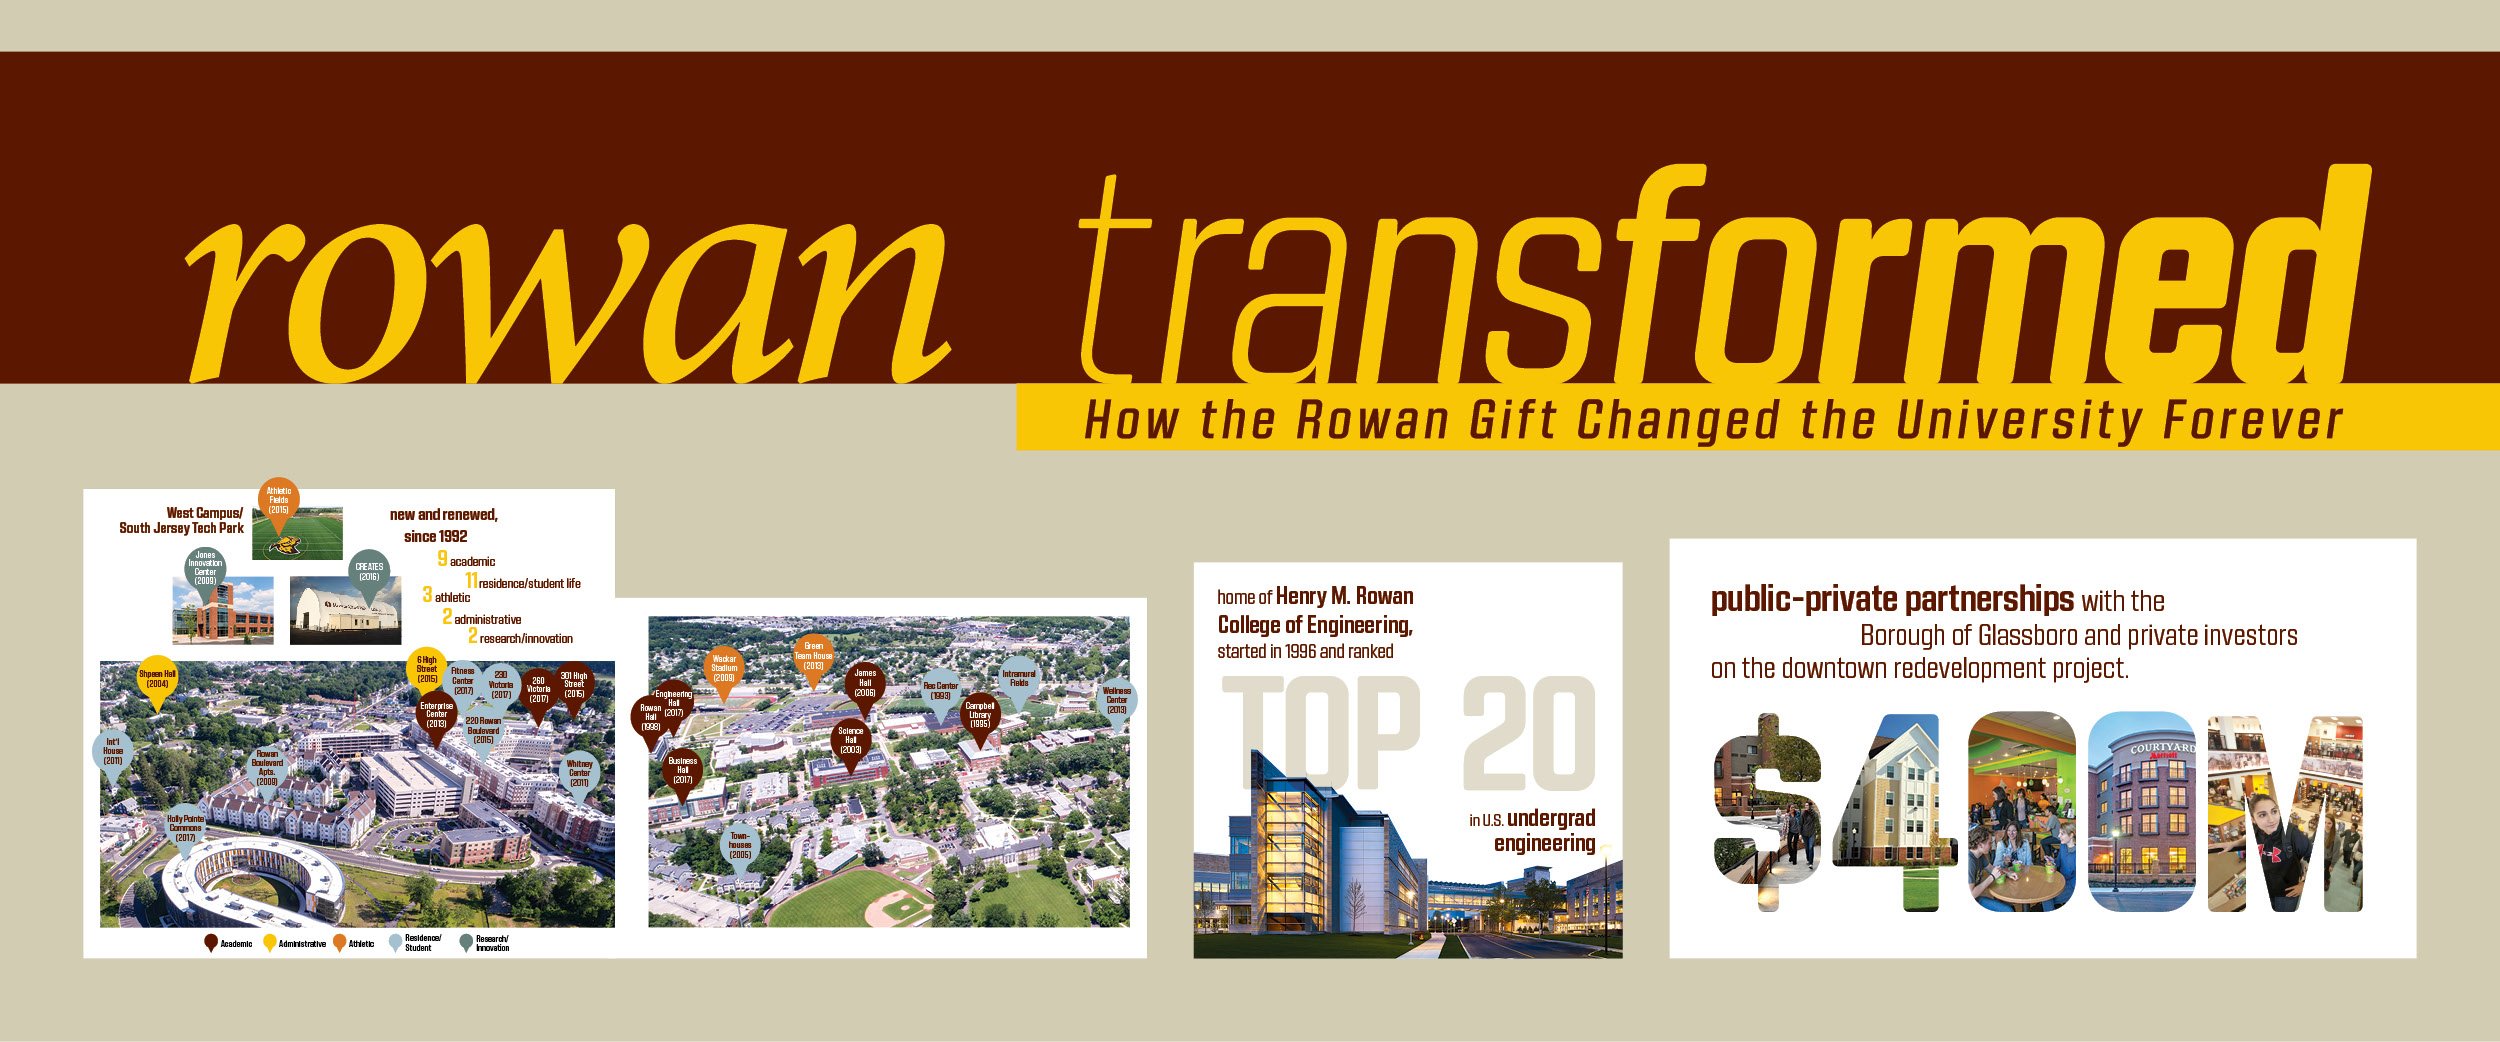 Rowan transformed: How the Rowan Gift changed the University forever